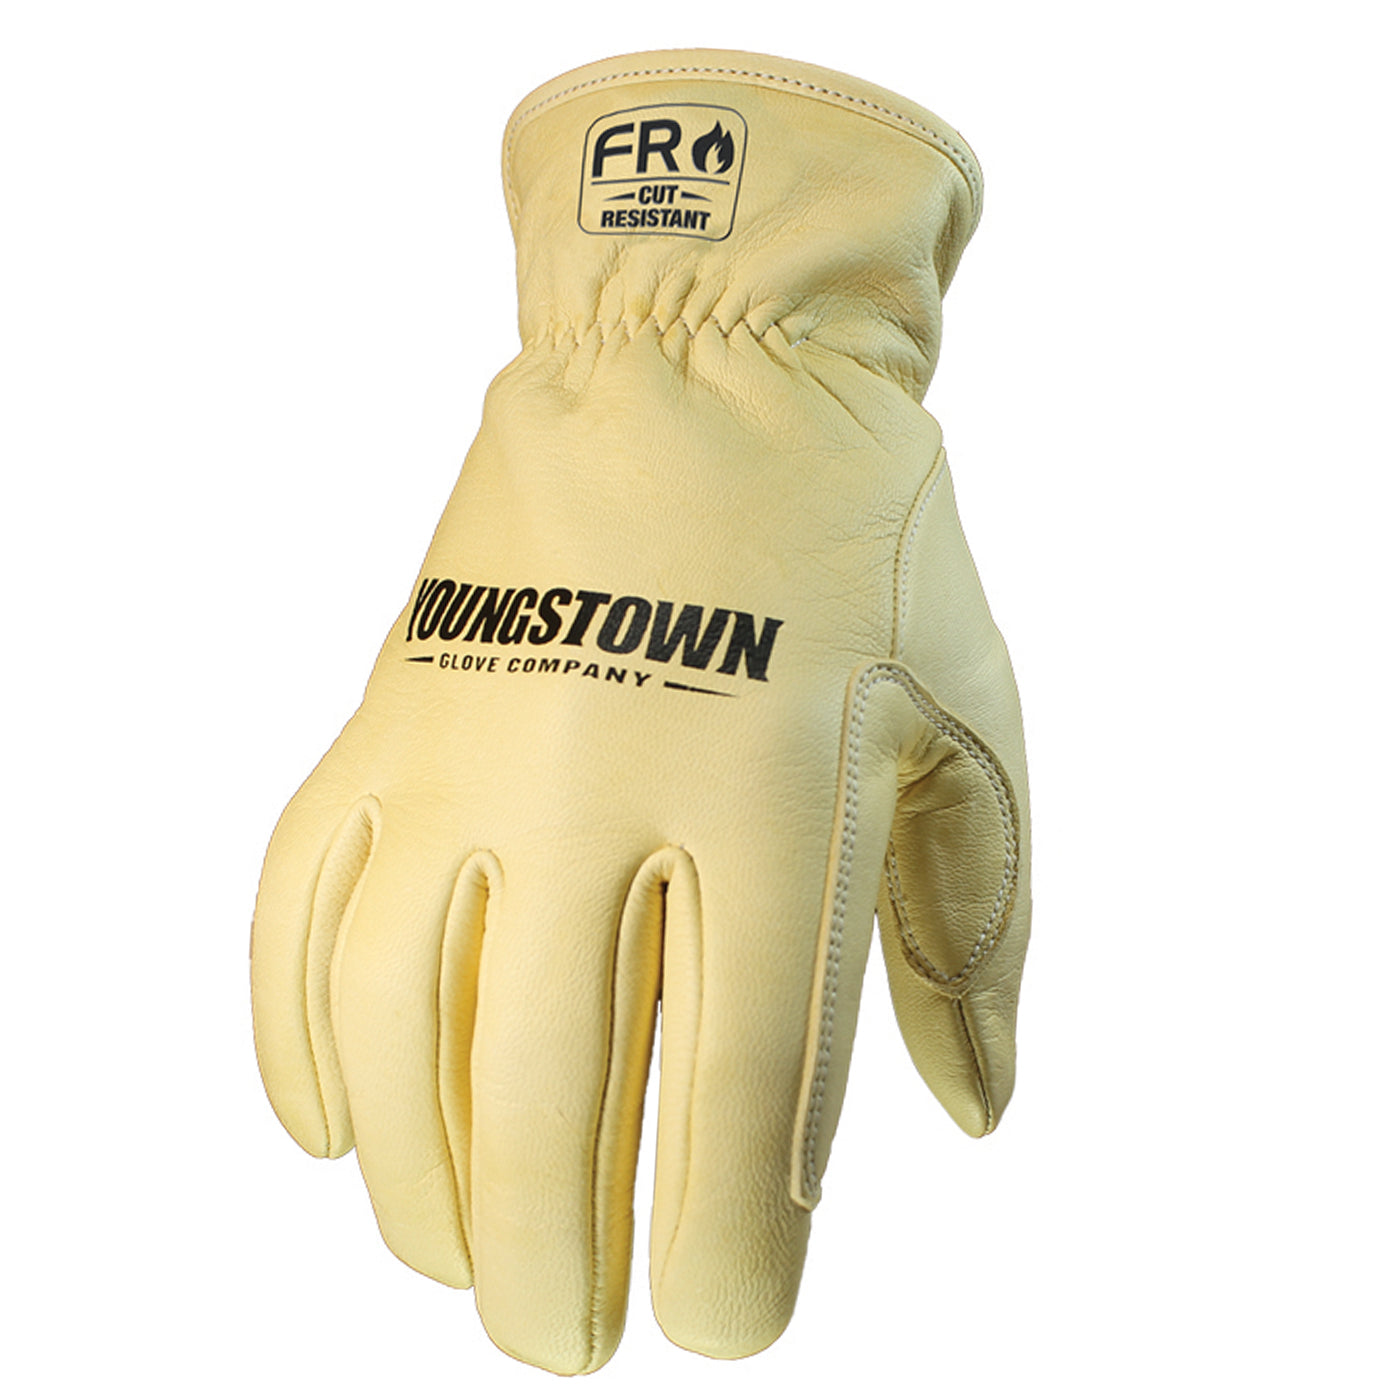 12-3475-60 Youngstown FR Hi-Dex Glove - Main image